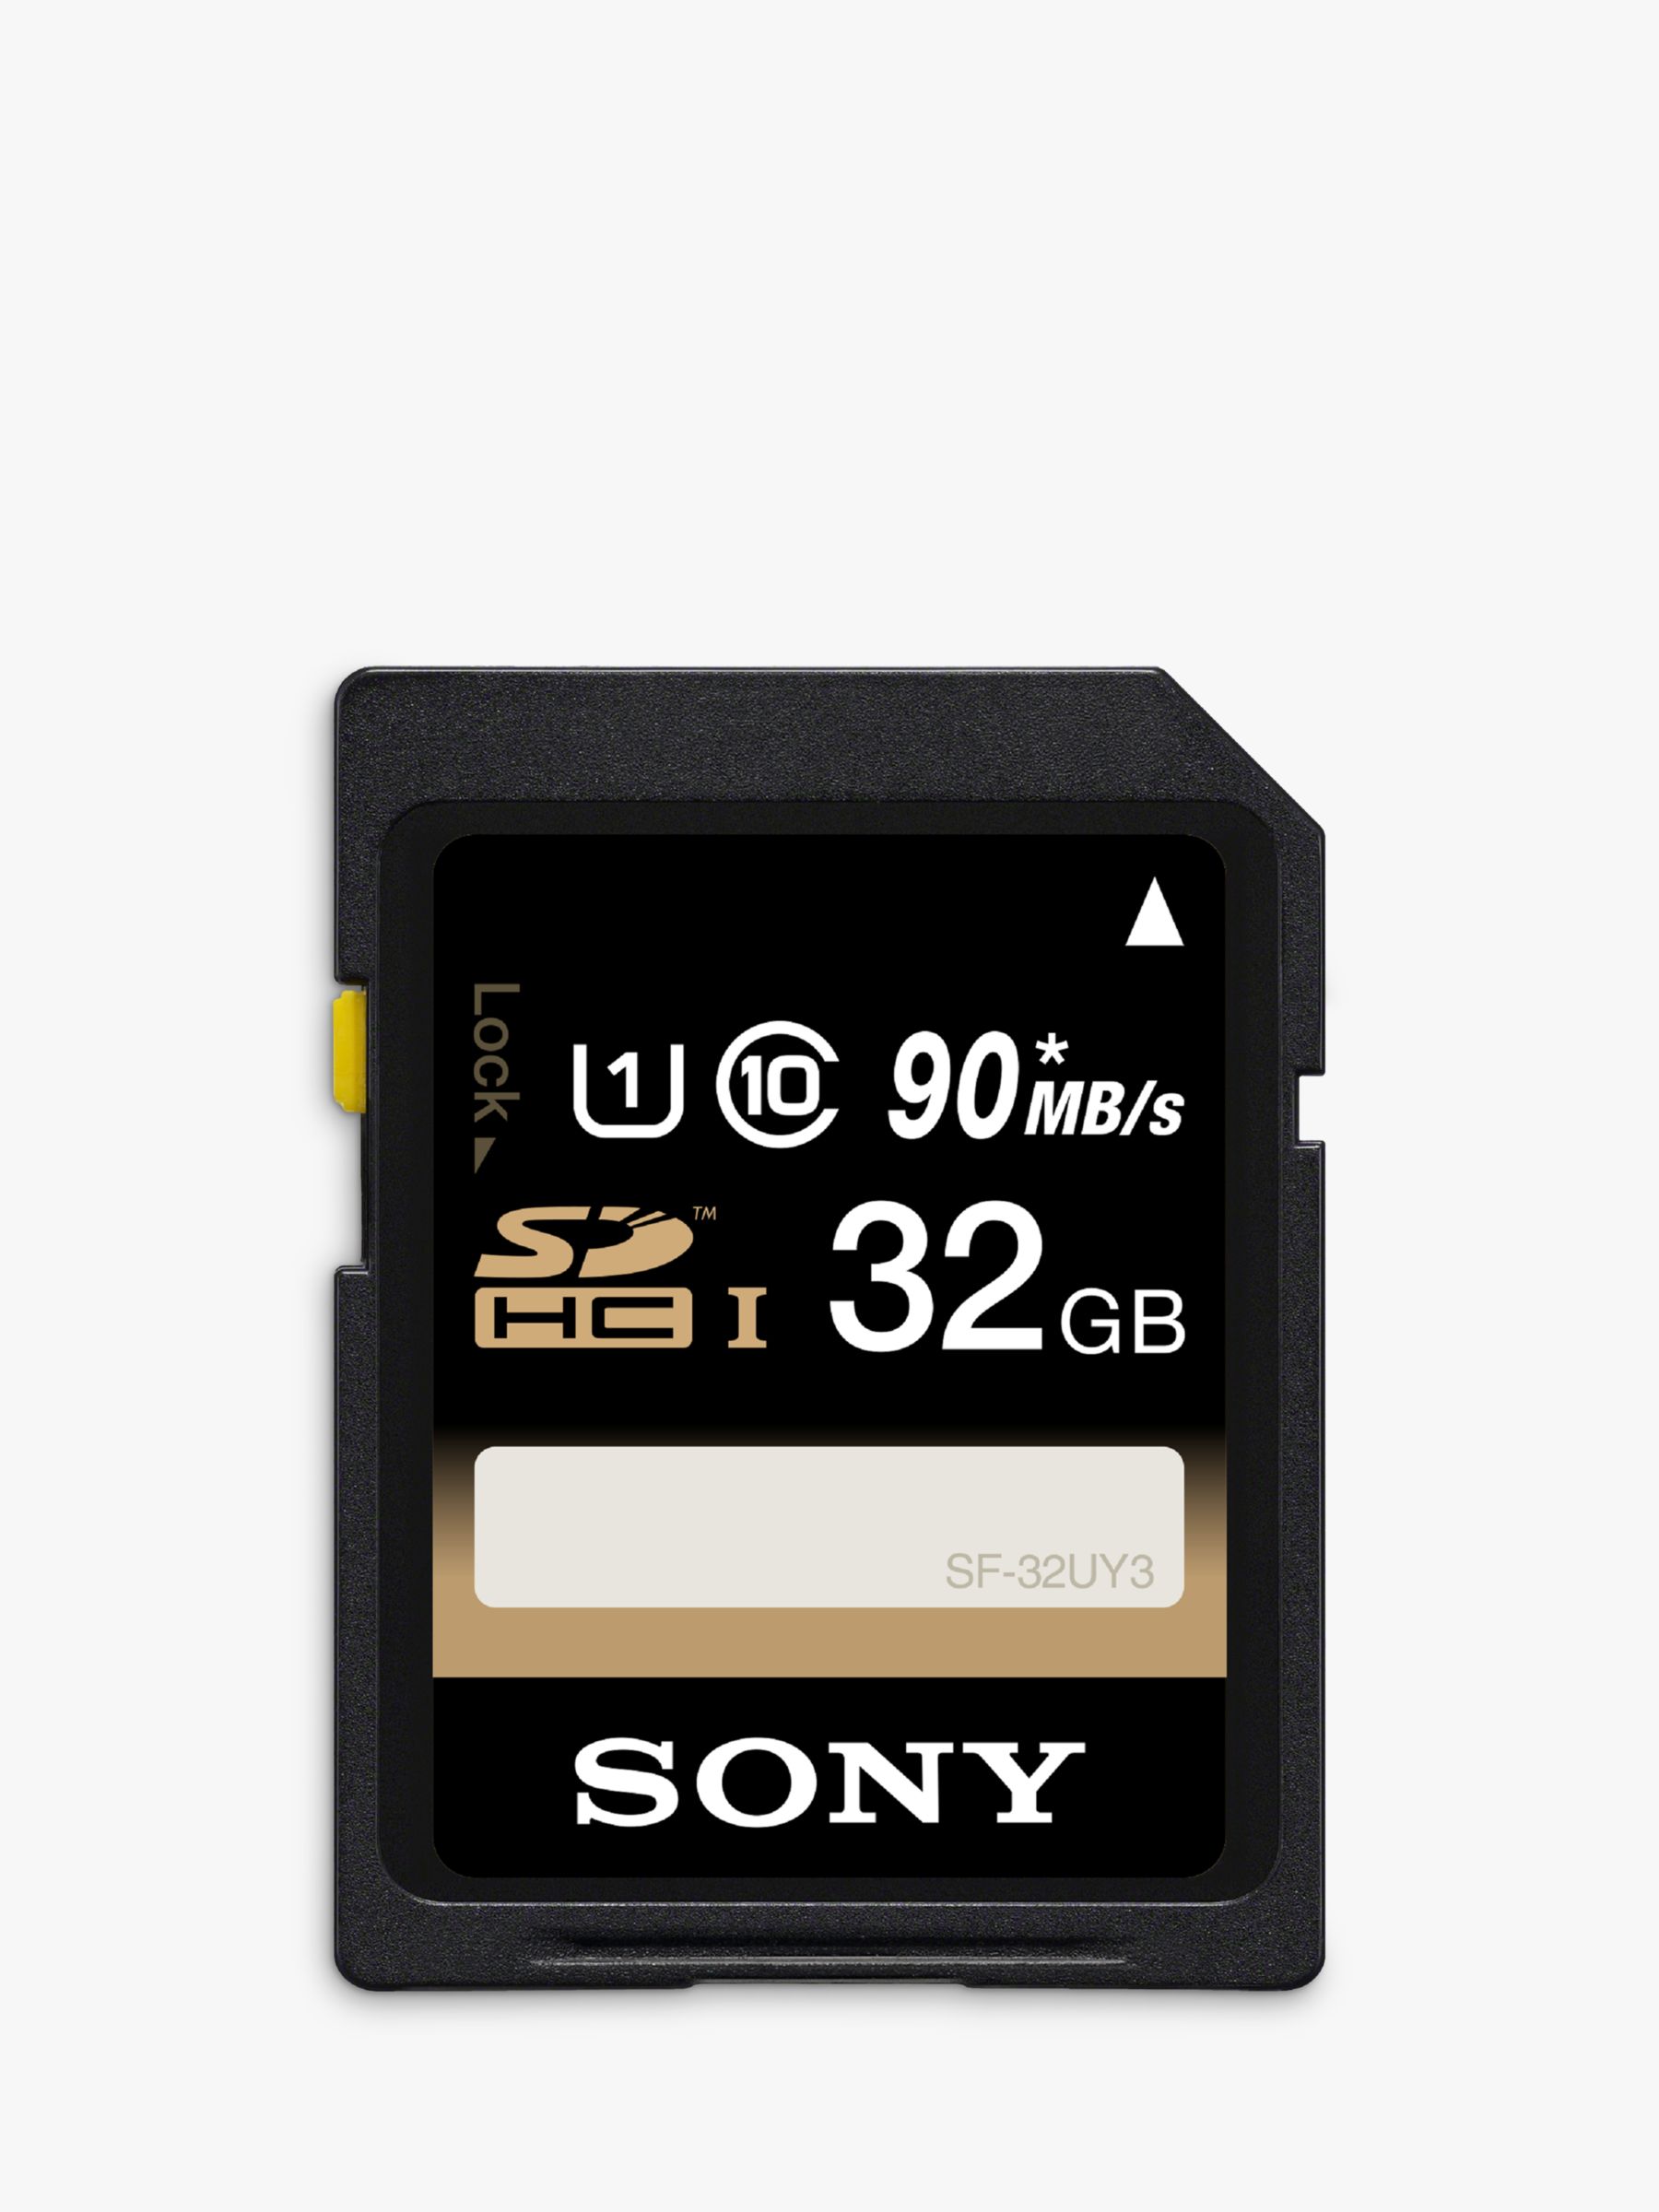 Sony Performance UHS-I Class 10 U1 SD Memory Card, 32GB, 90MB/s